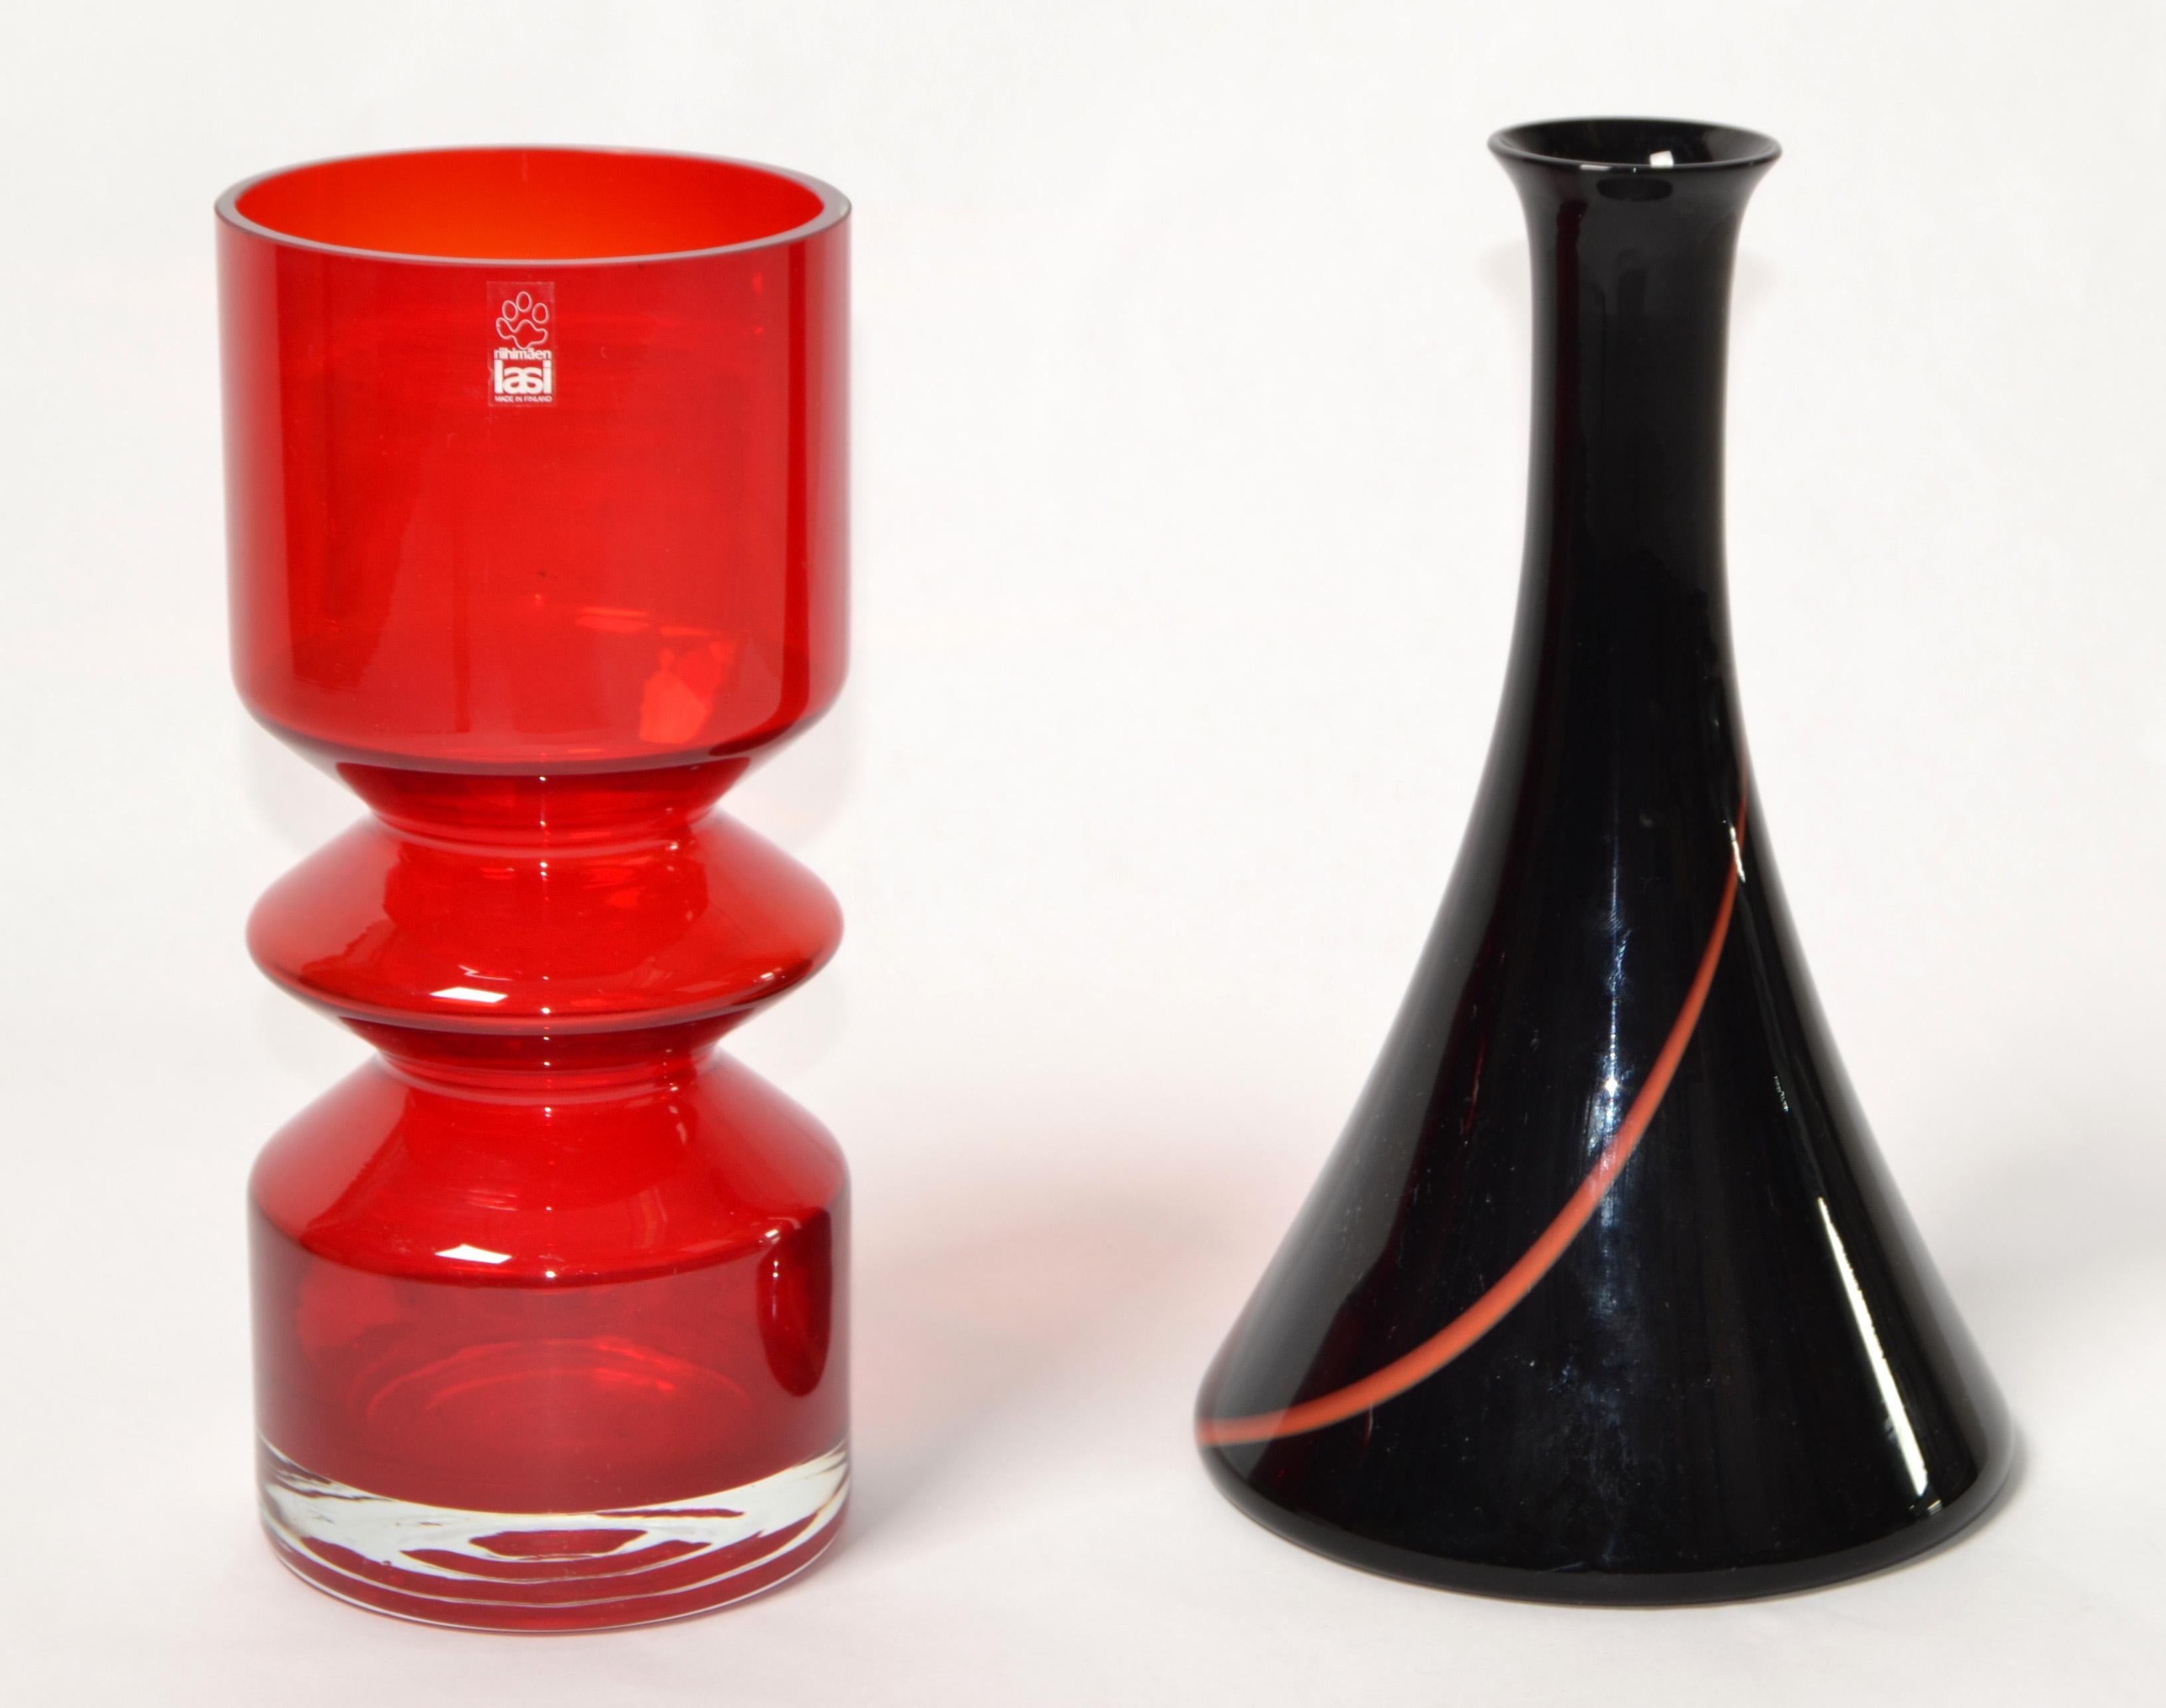 Blown Glass Tamara Aladin Riihimaen Lasi Oy Finland Red Blown Art Glass Vase Scandinavian   For Sale